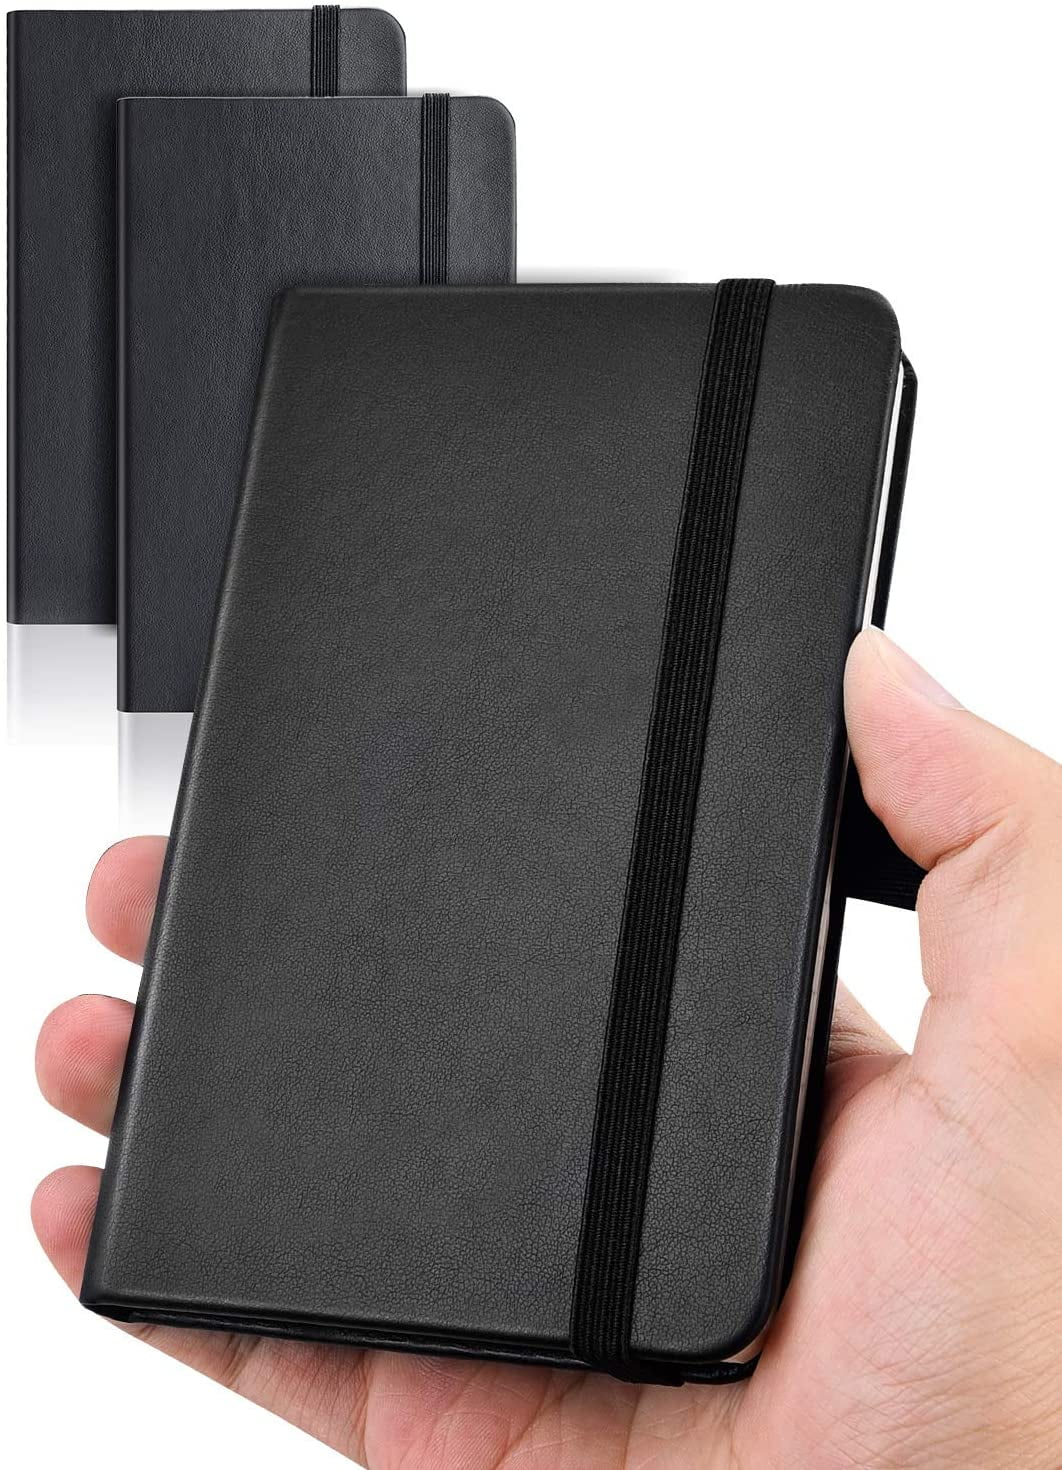 Black Inside Pockets 100gsm Ruled/Lined Paper 3.5 x 5.5 Small Bullet Hard Cover Pen Holder 2-Pack